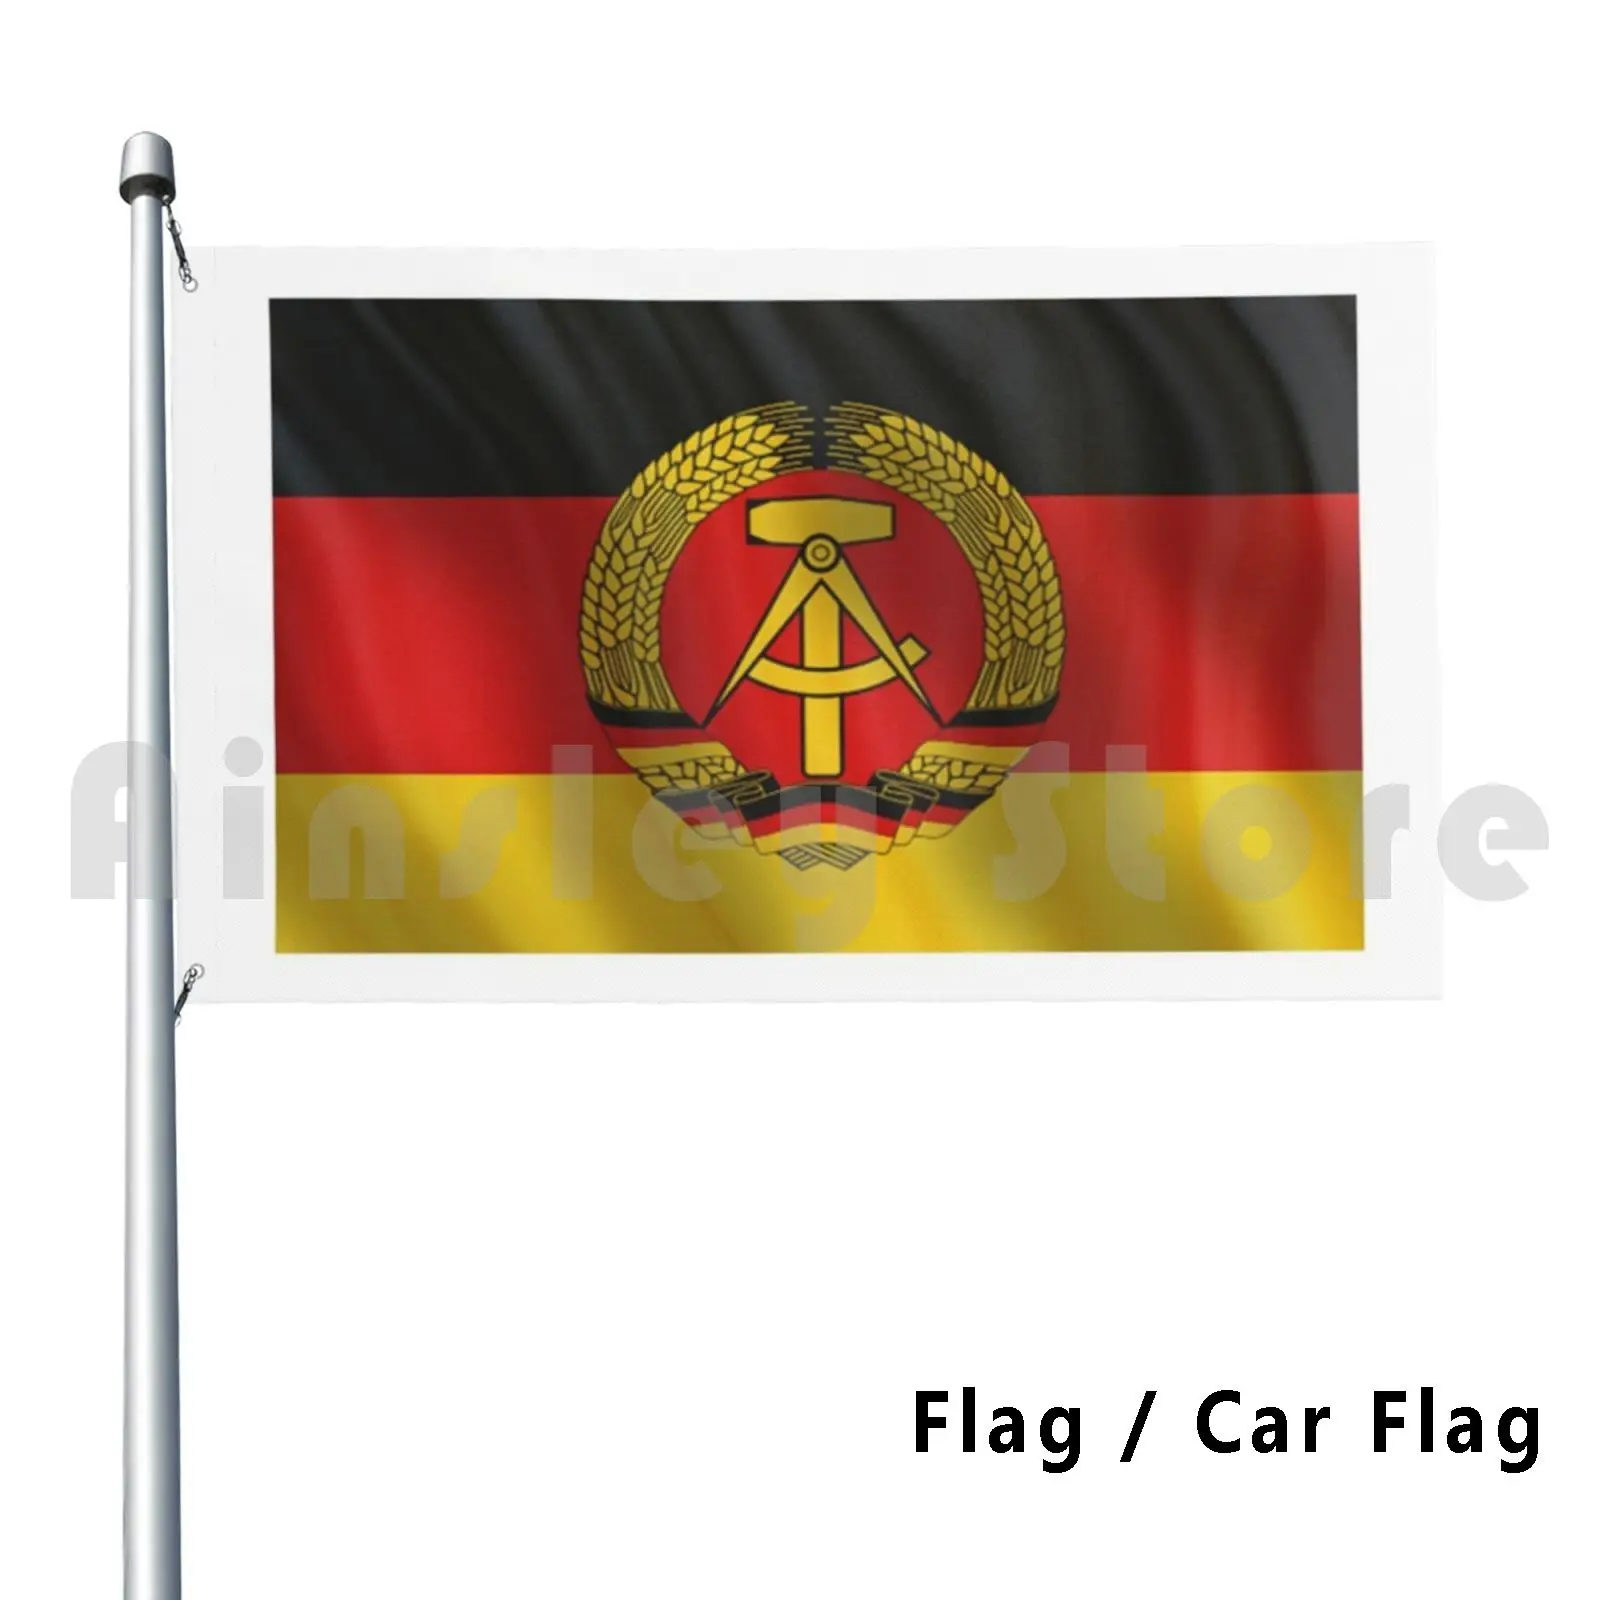 Gdr Flag / Flag Motif / Gdr East German Flag Design Outdoor Decor Flag Car Flag Nostalgia Of Gdr Gdr East Germany